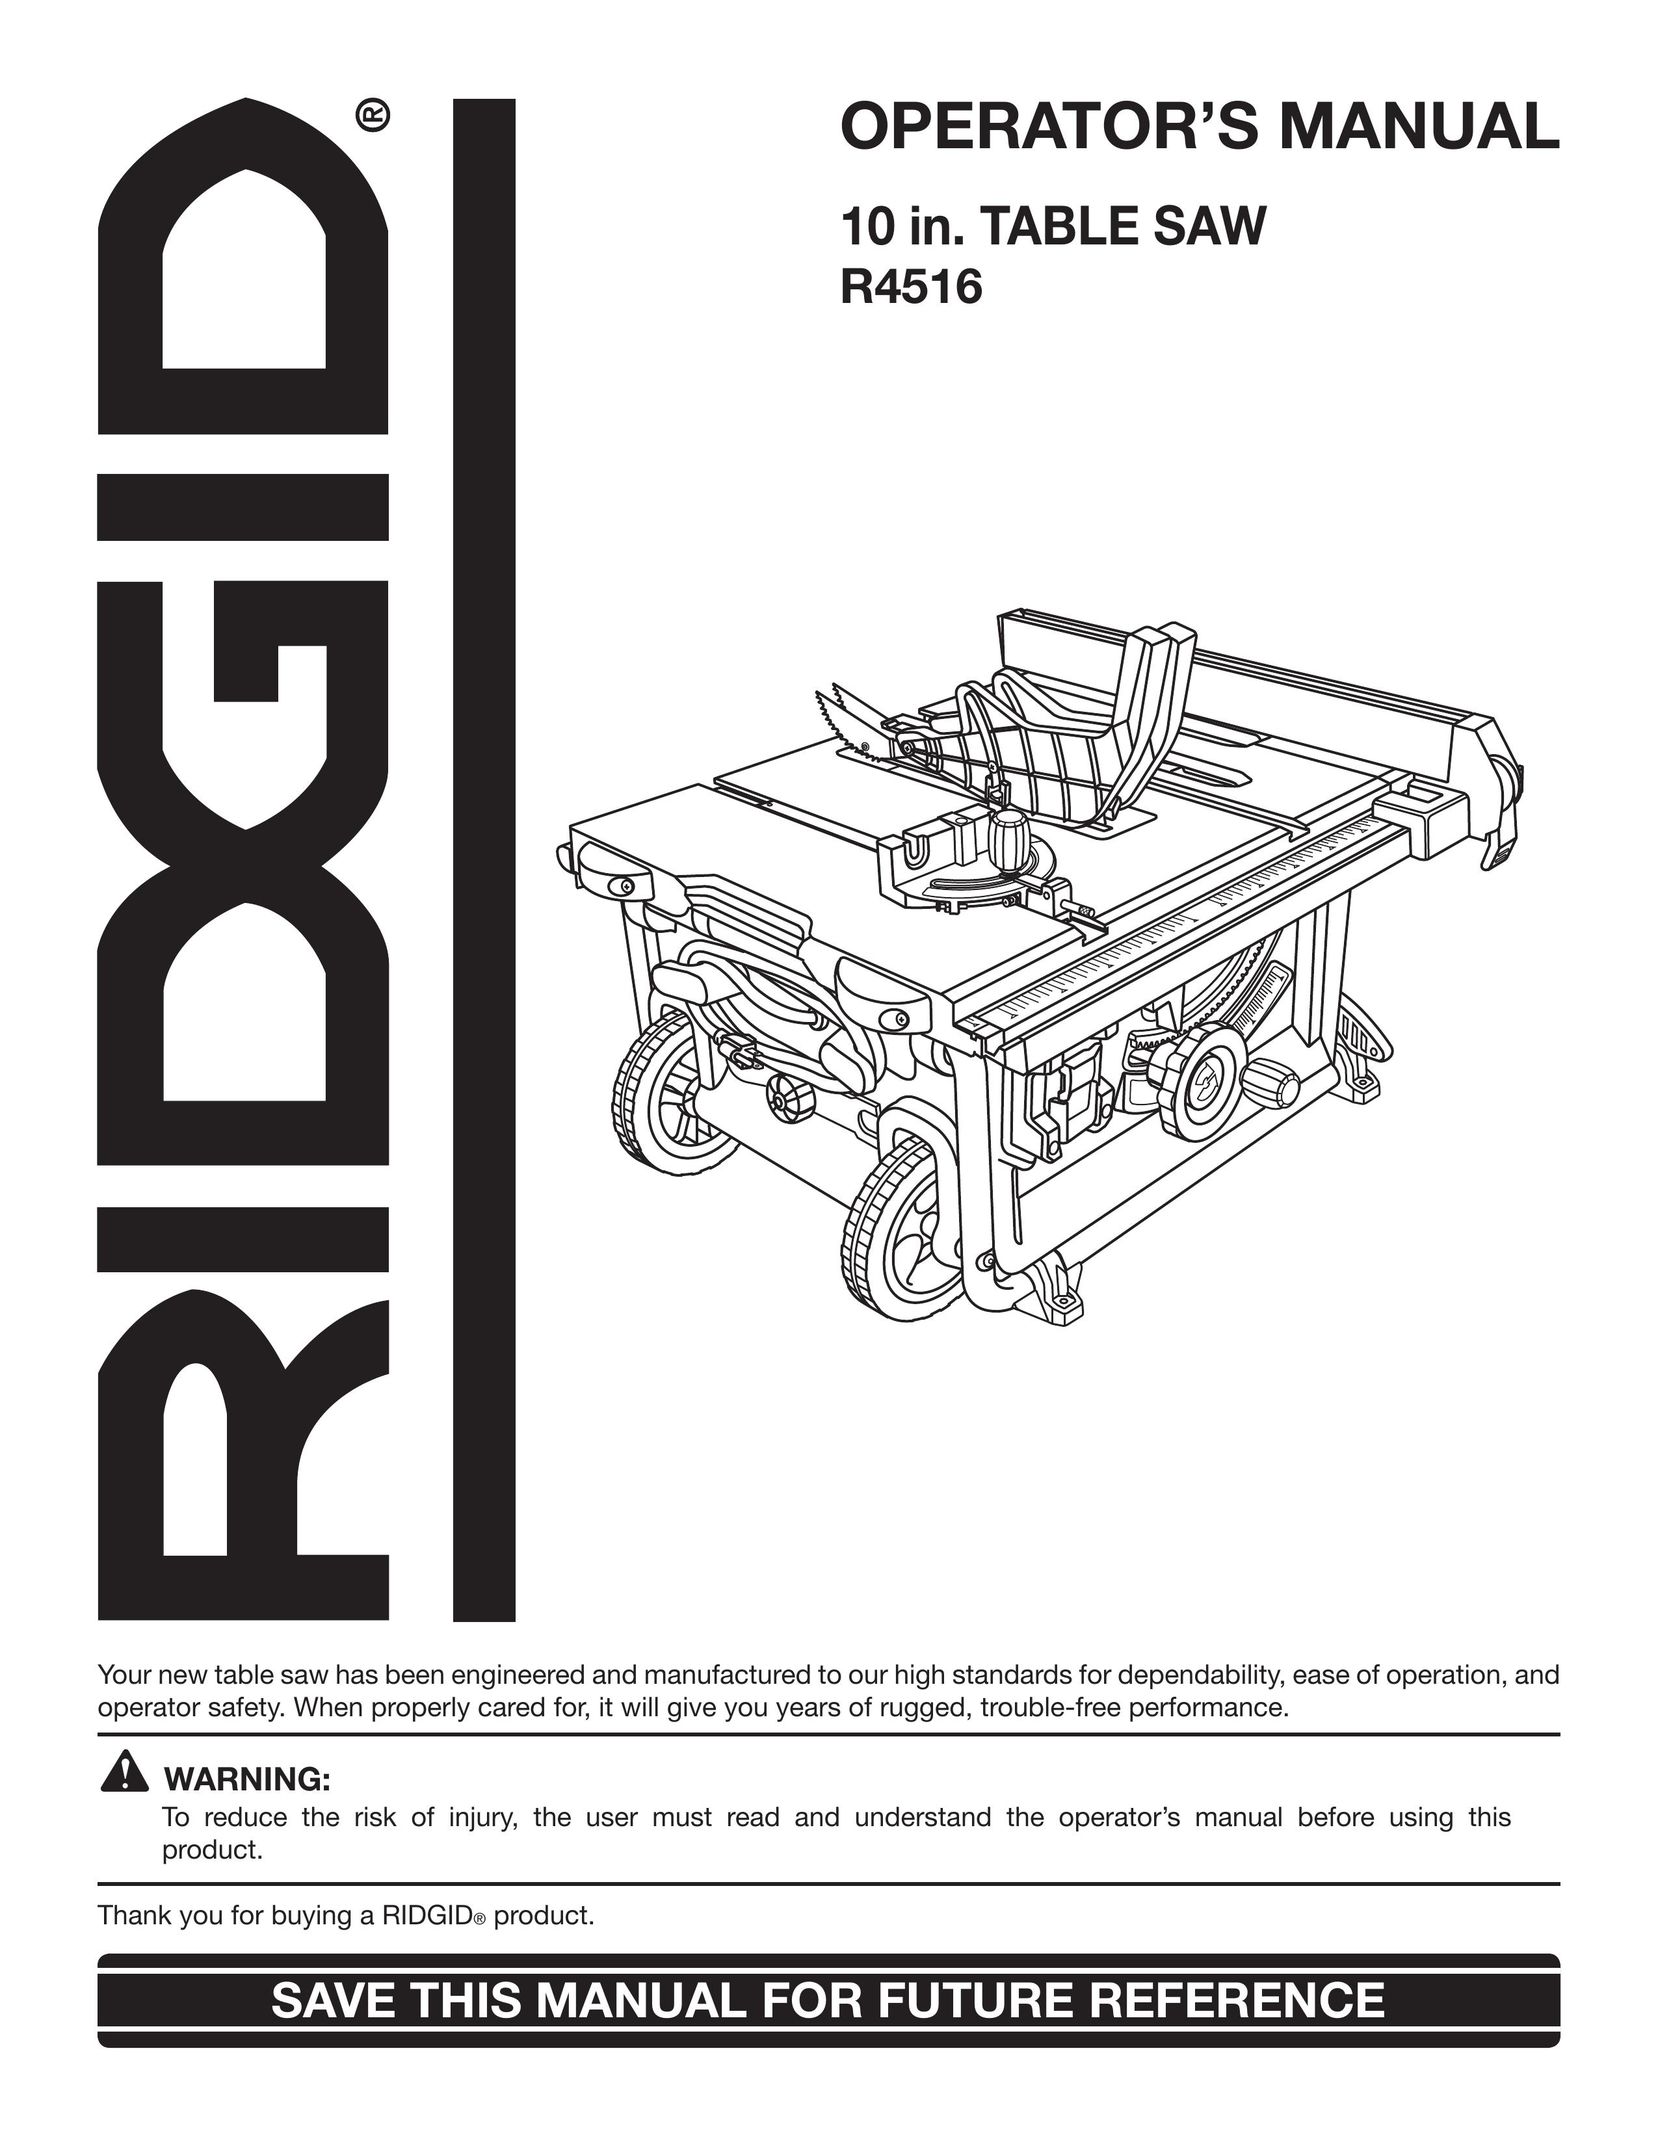 RIDGID R4516 Saw User Manual